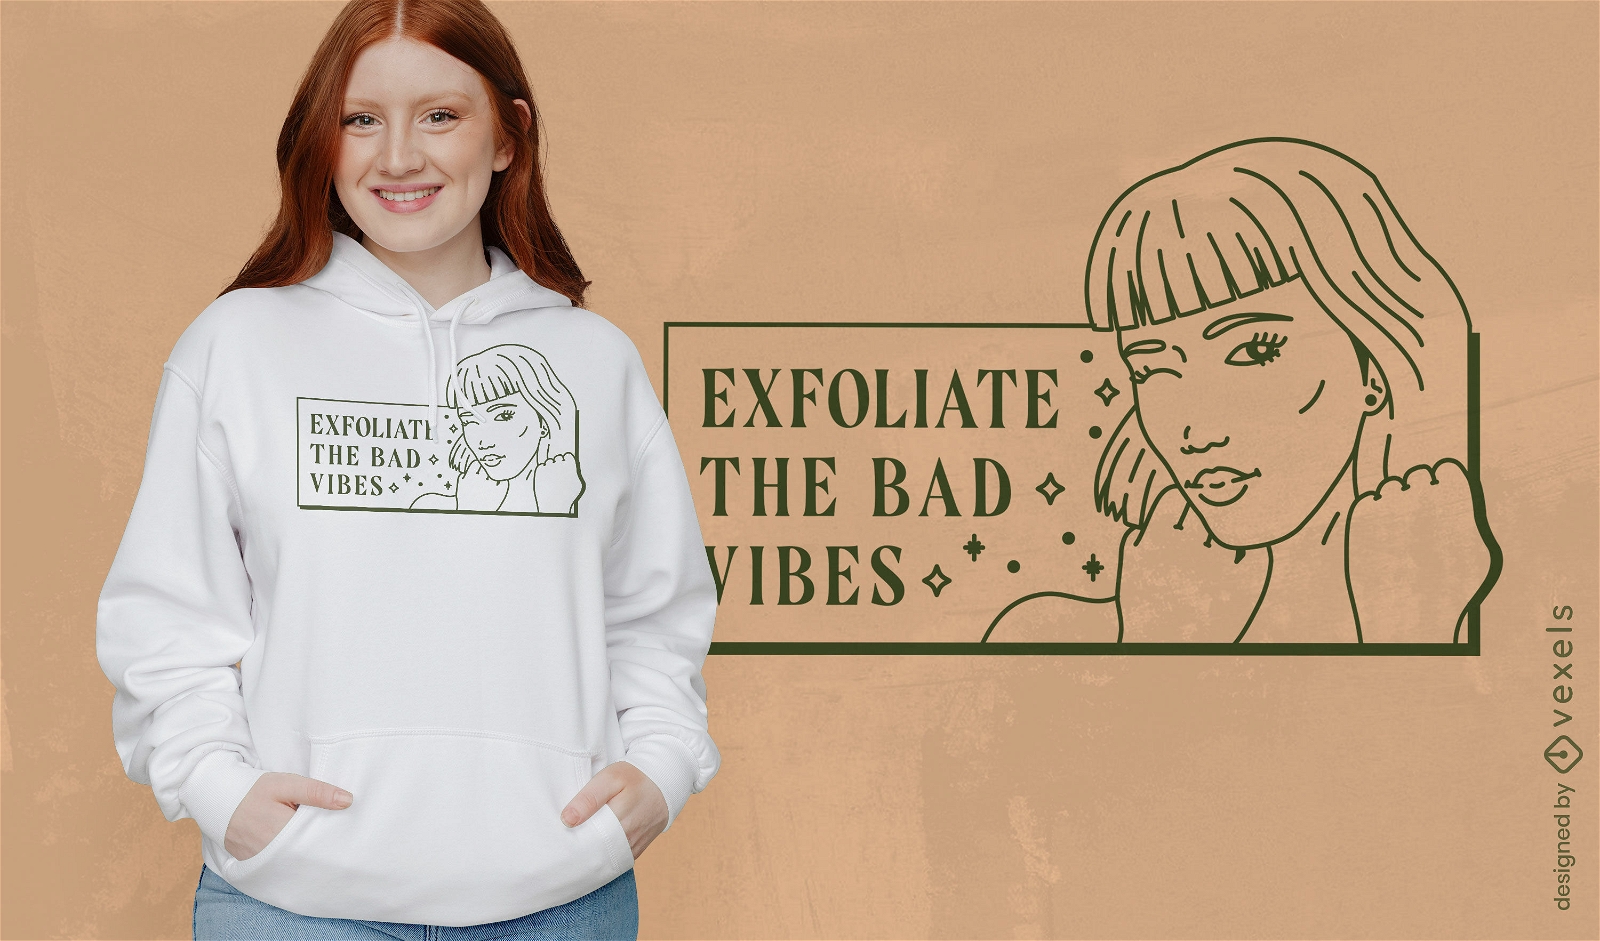 Exfoliate beauty quote t-shirt design